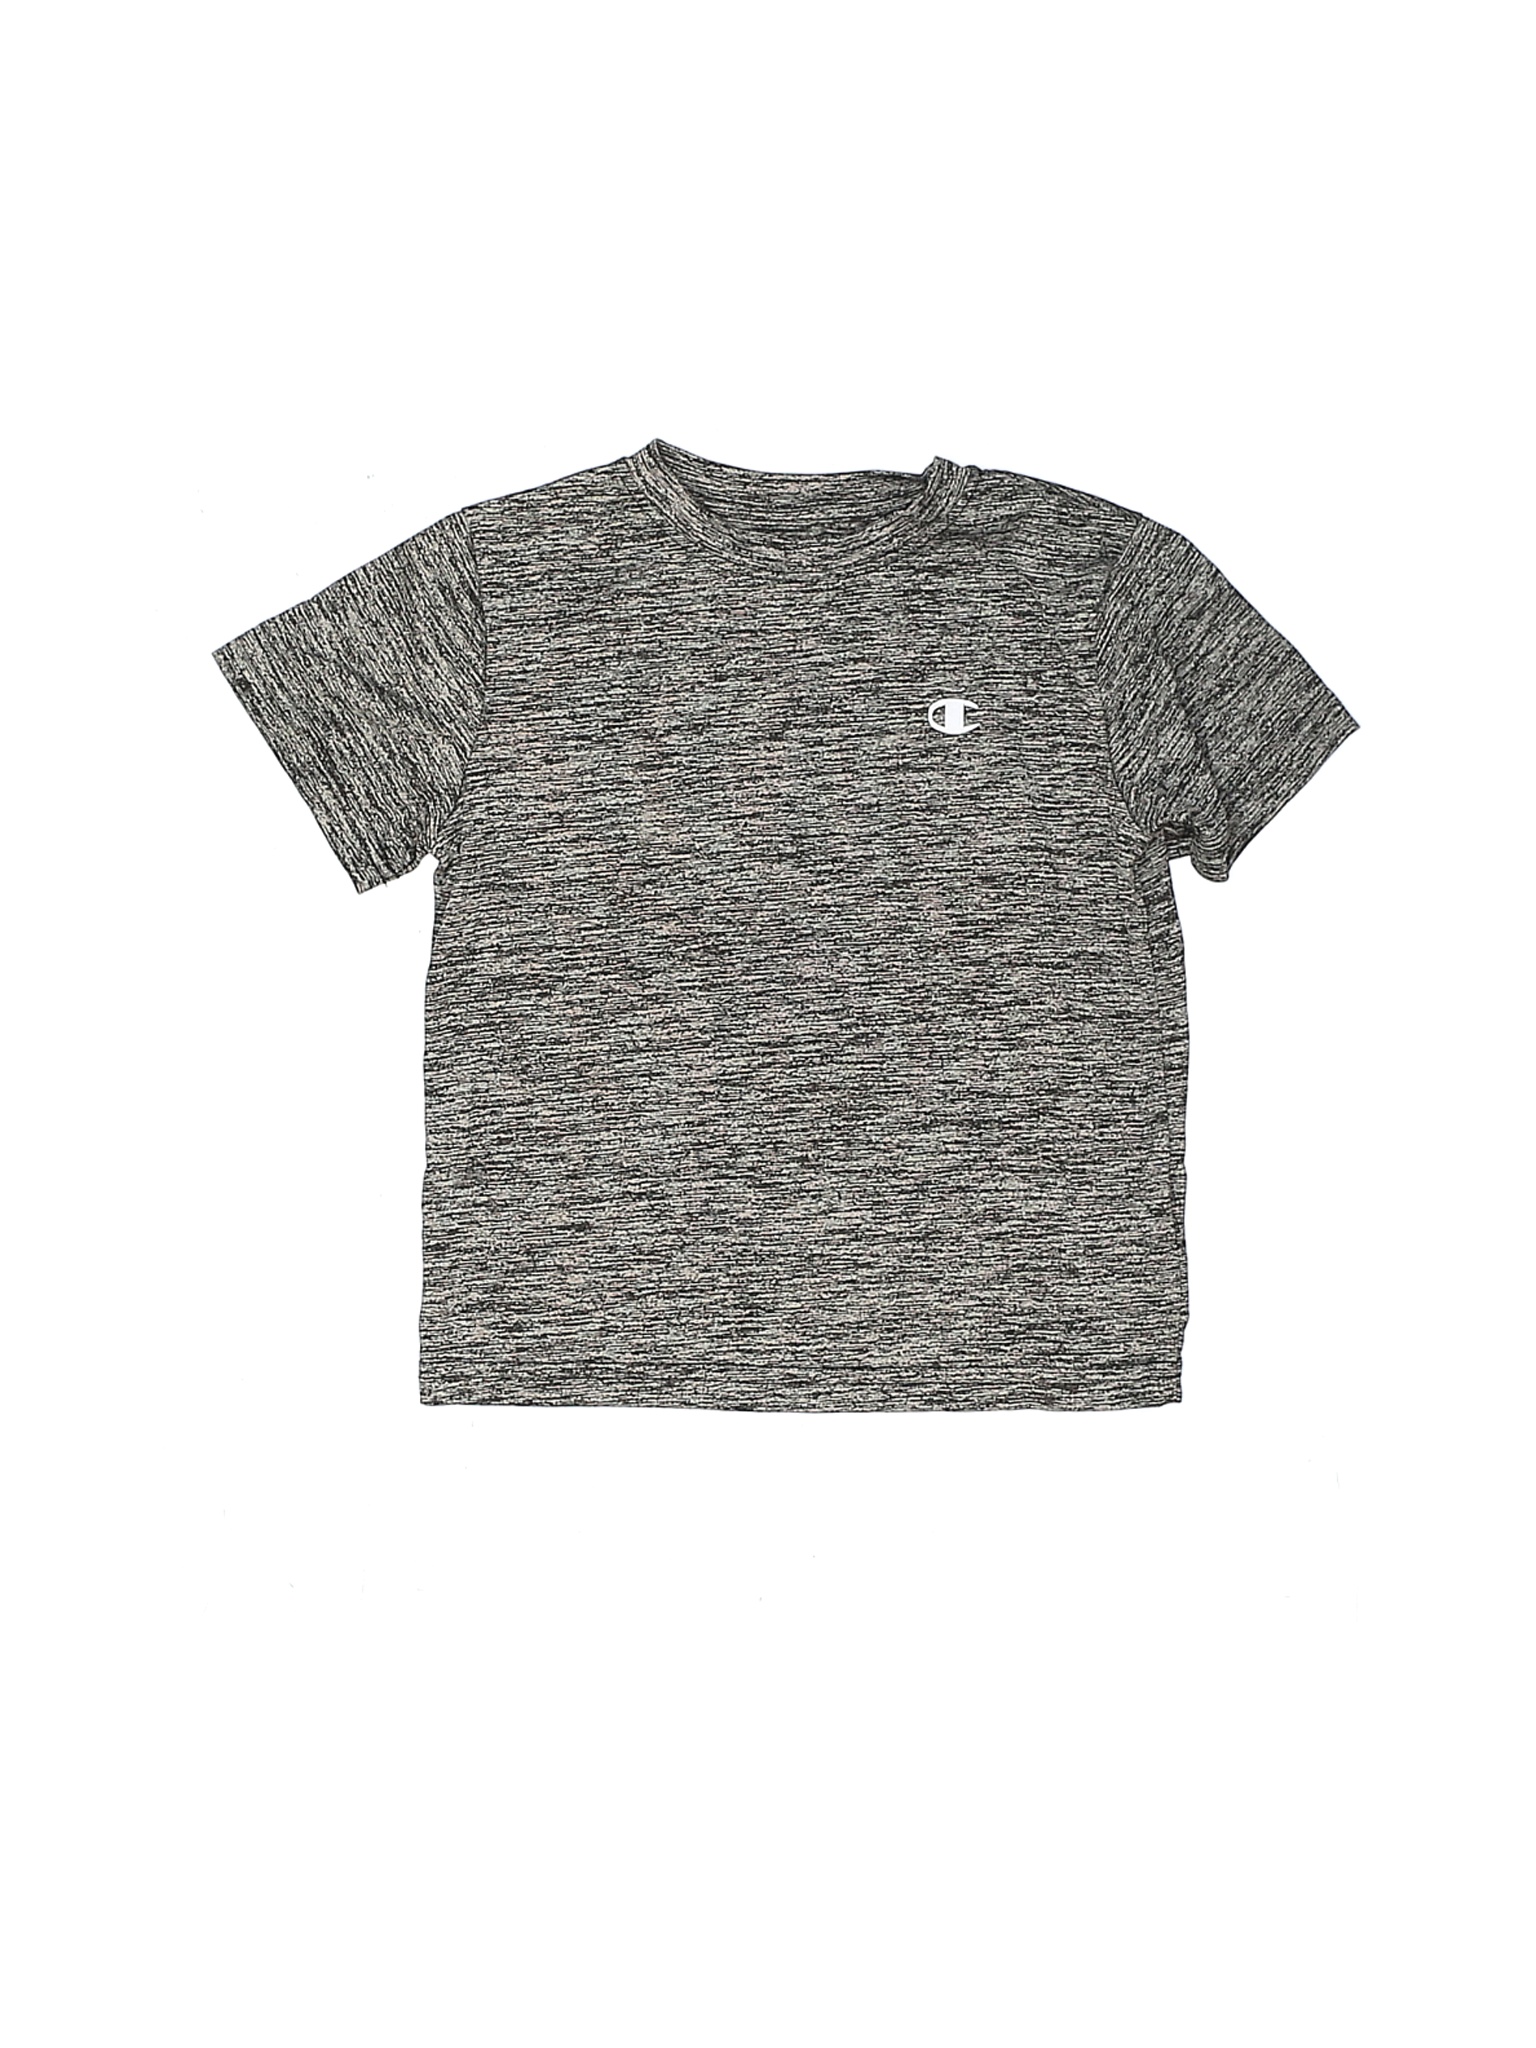 Champion Boys Gray Active T-Shirt 5 | eBay